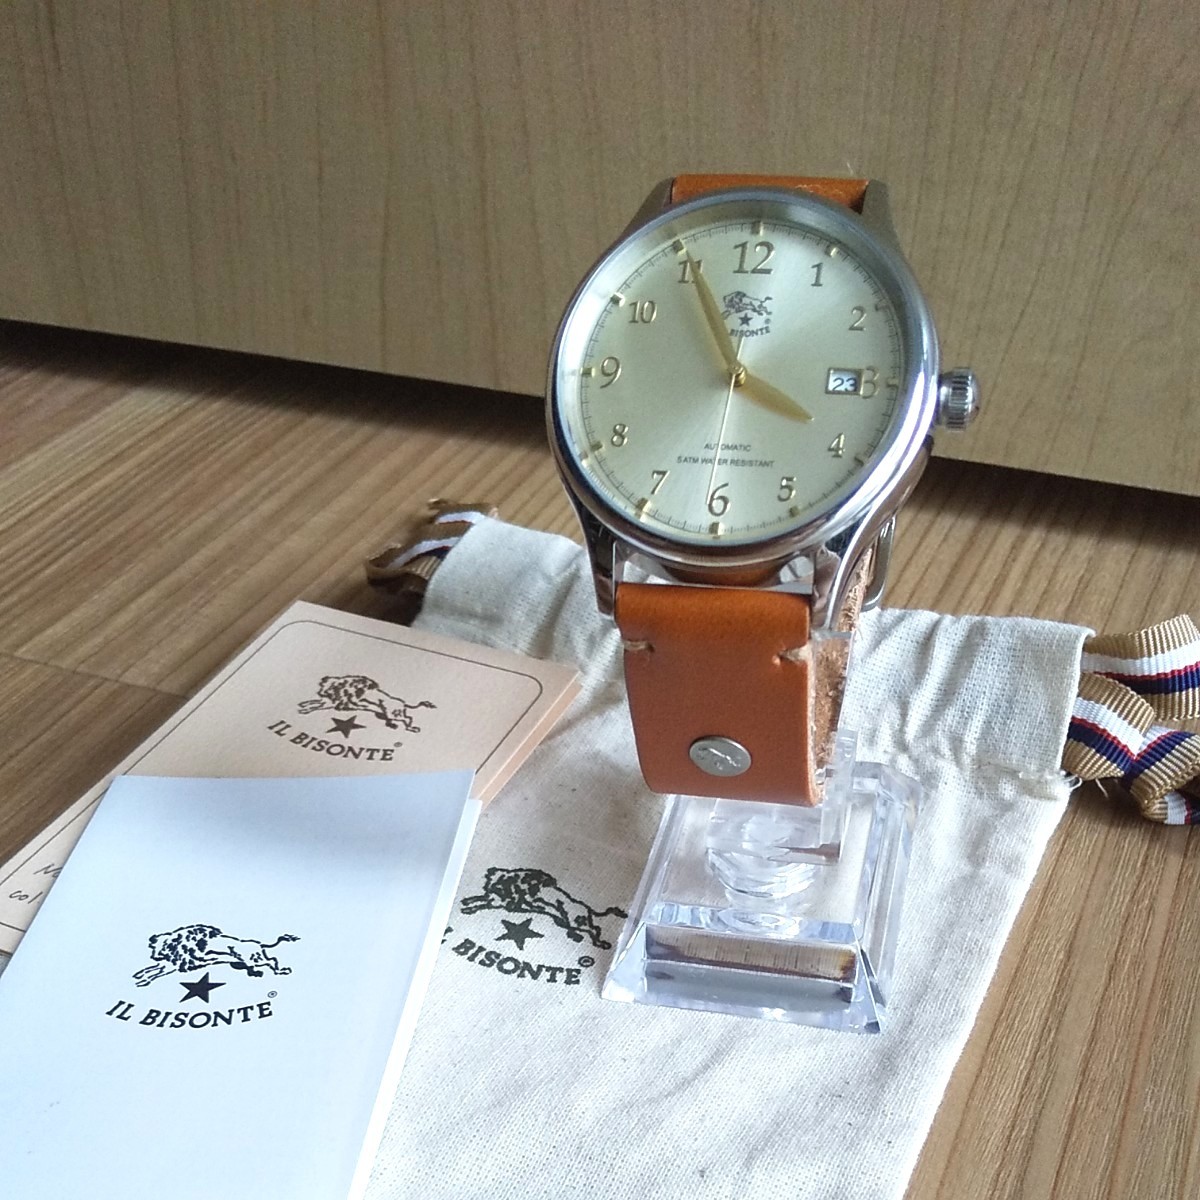 IL BISONTE 腕時計自動巻き sakumoto.co.jp